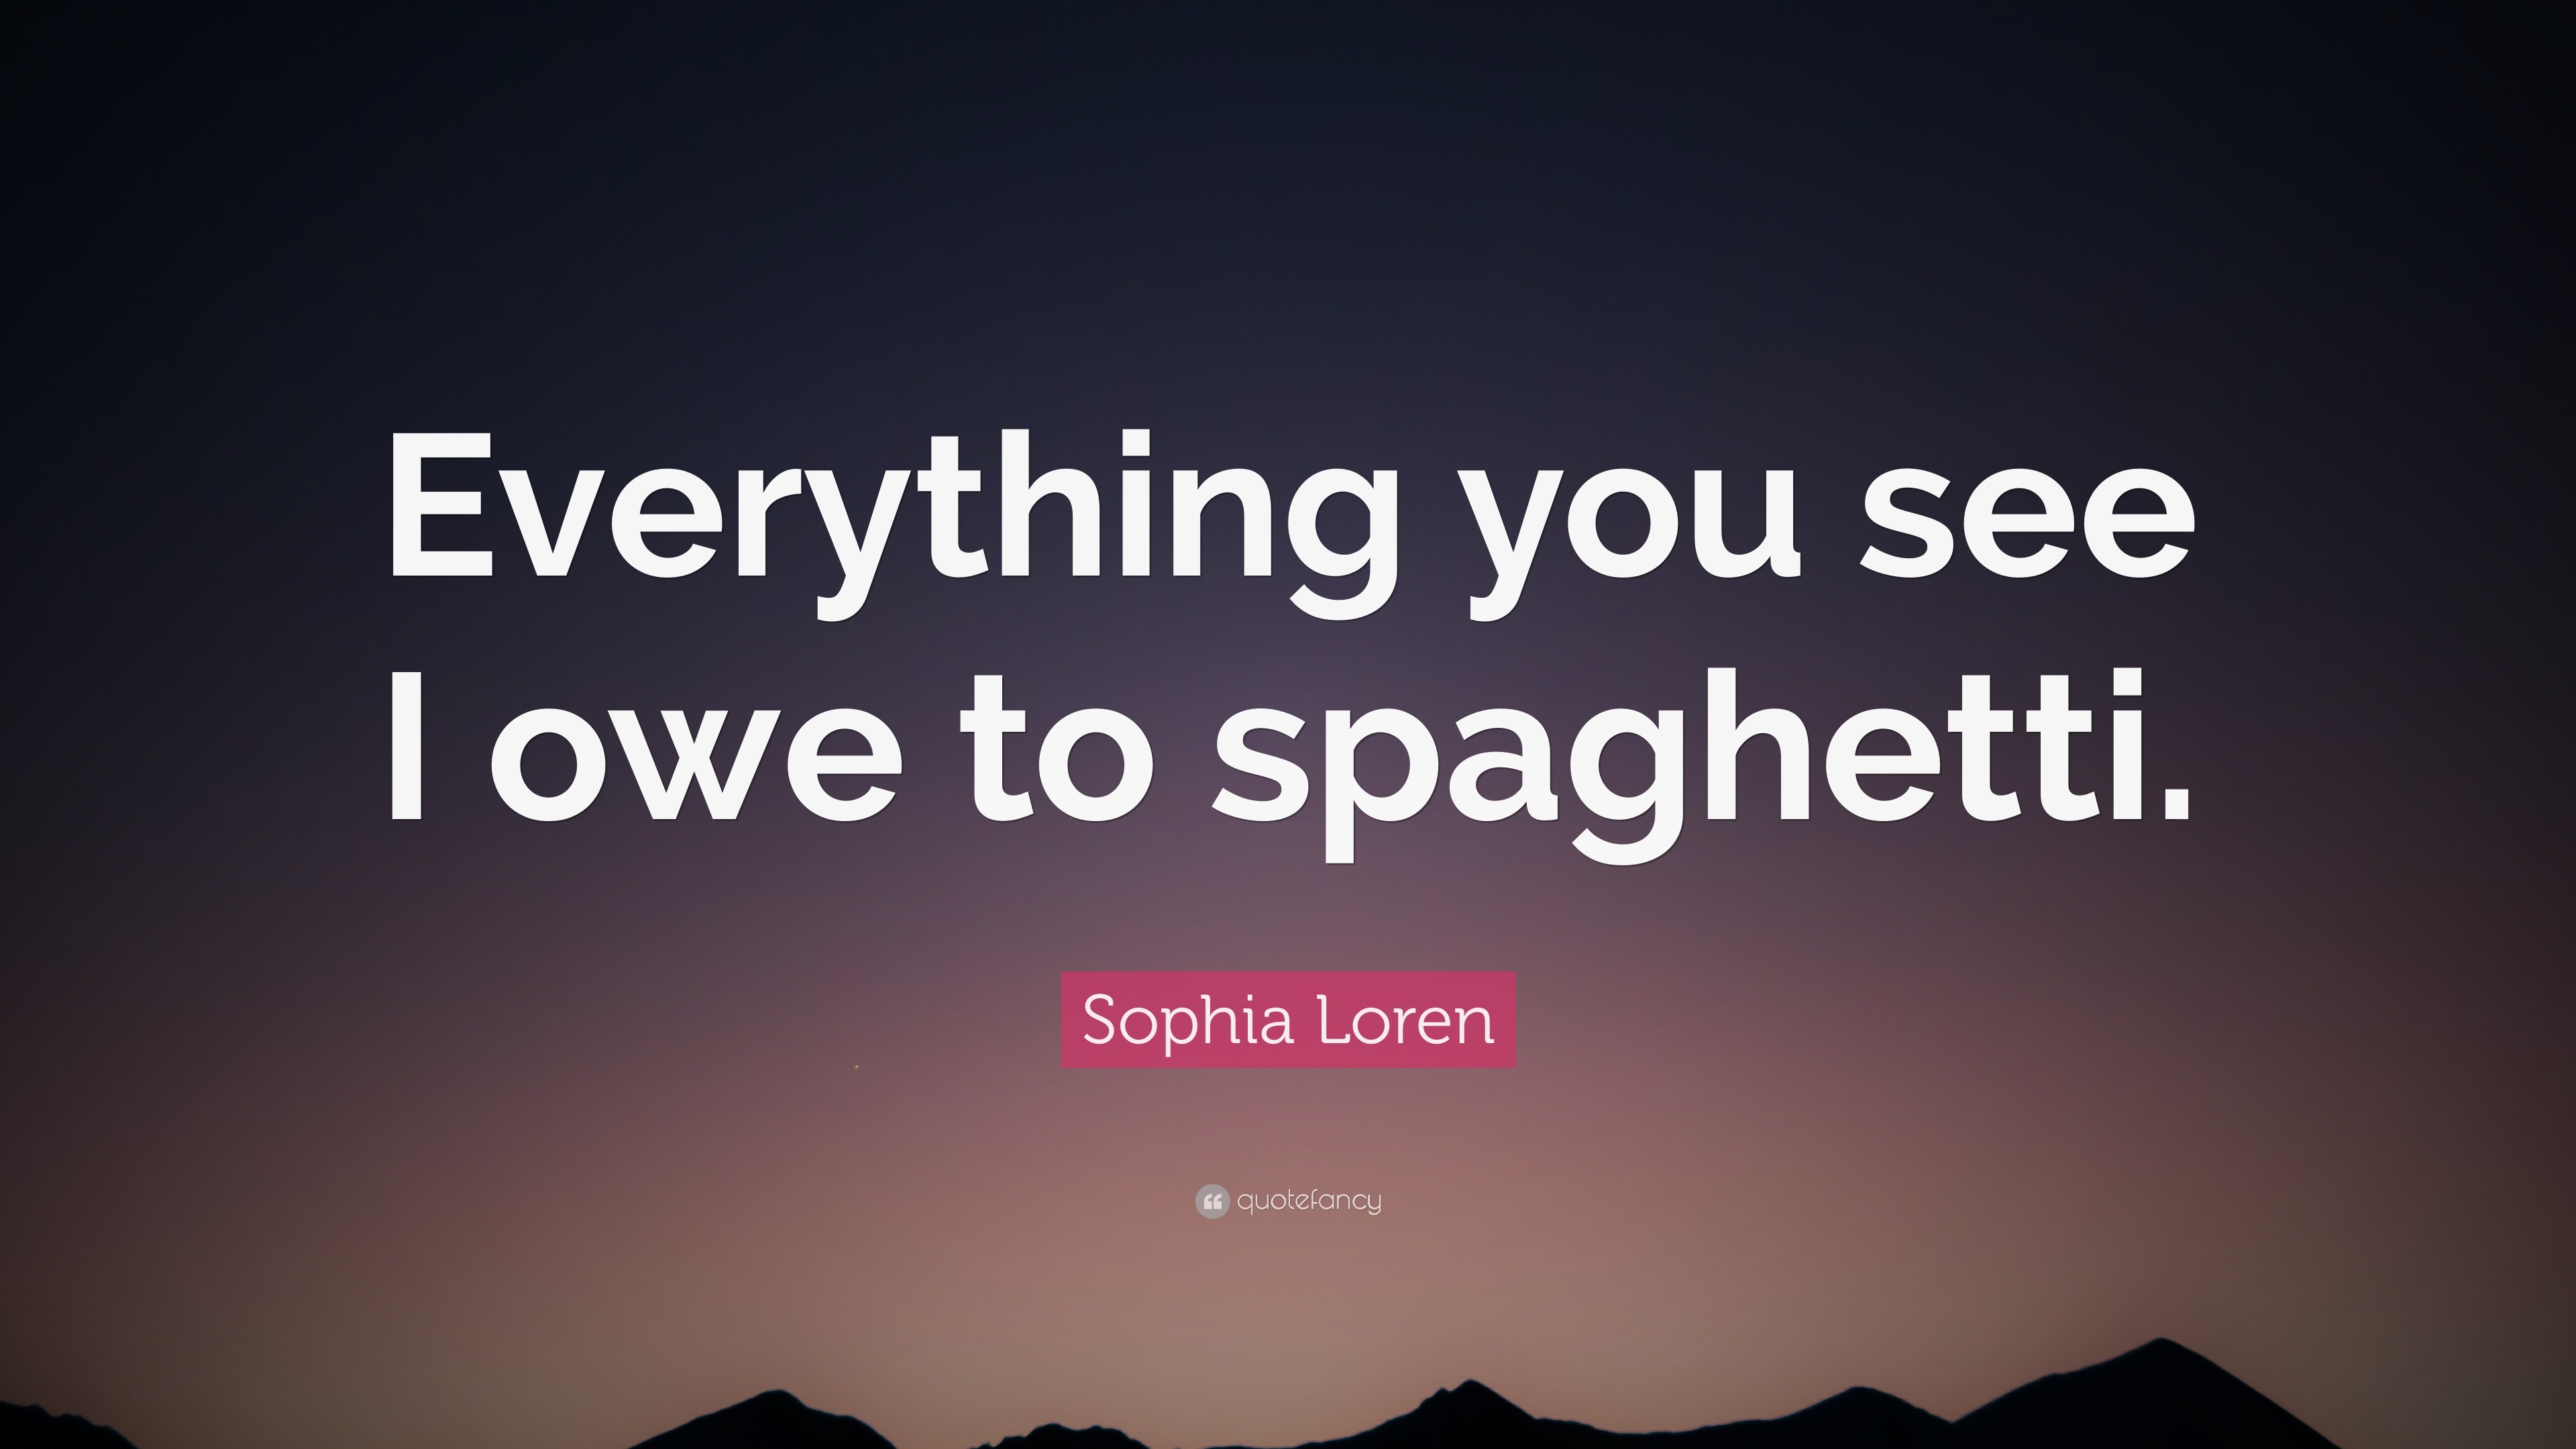 Sophia Loren Quote: “Everything you see I owe to spaghetti.”